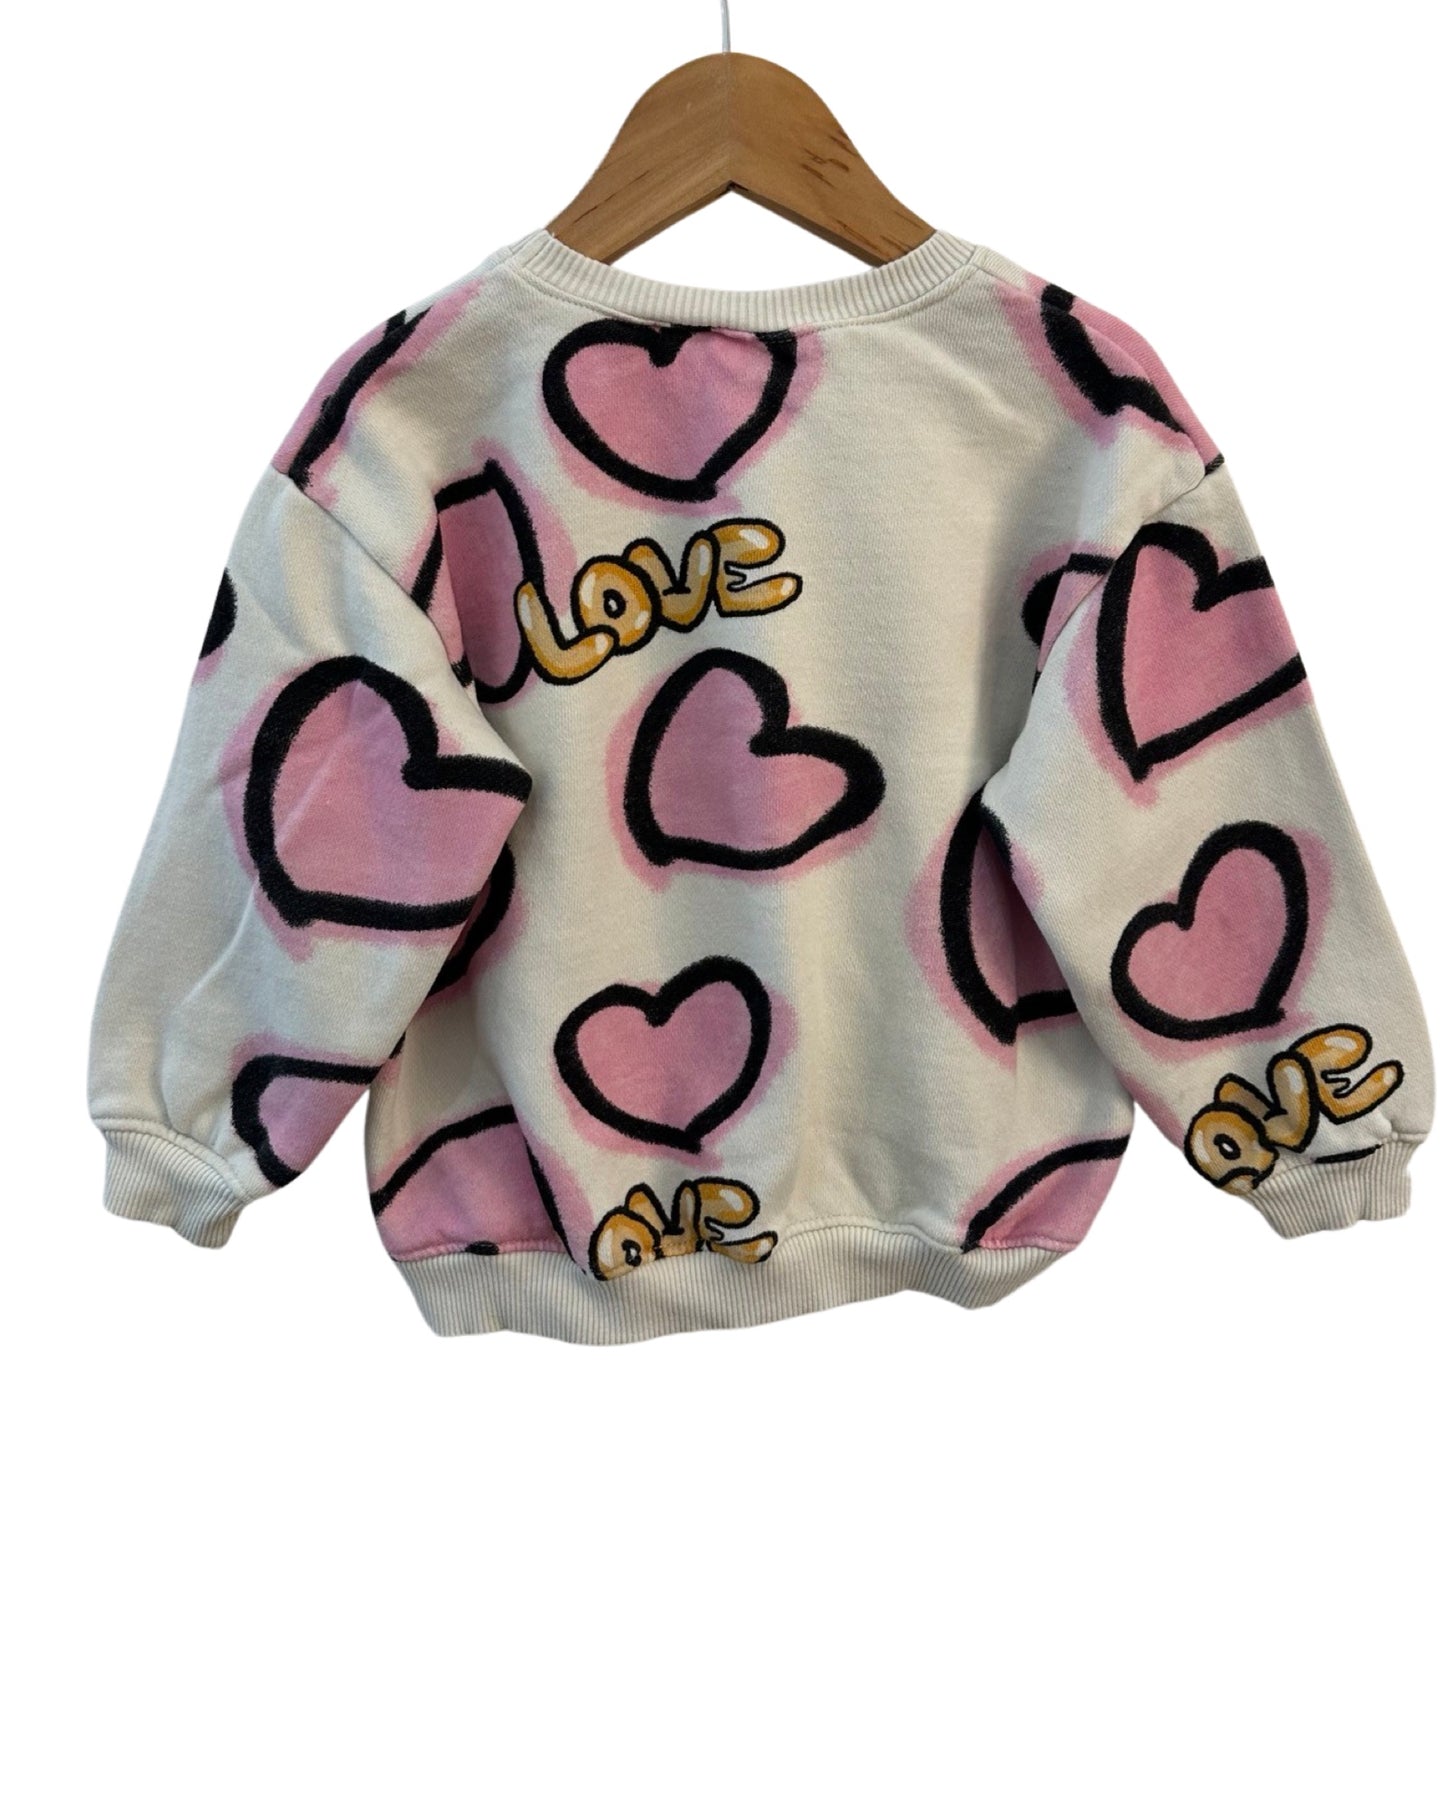 Zara kids graffiti 'Love' sweater (3-4yrs)